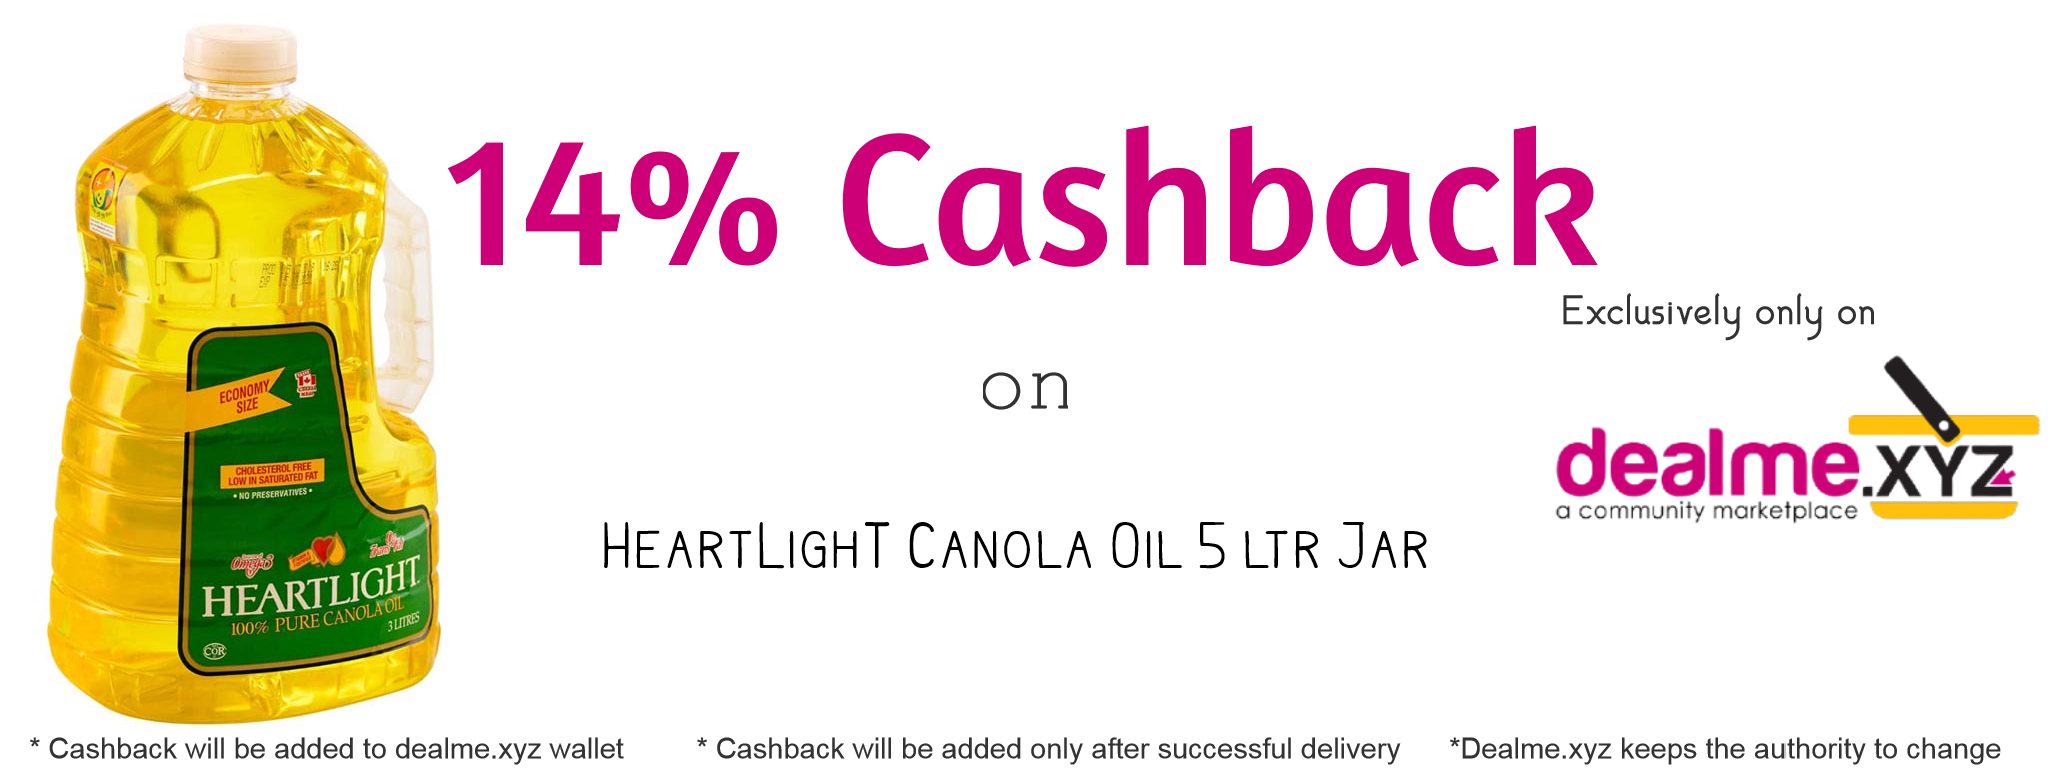 Heart Light Canola oil cashback offer on dealme.xyz